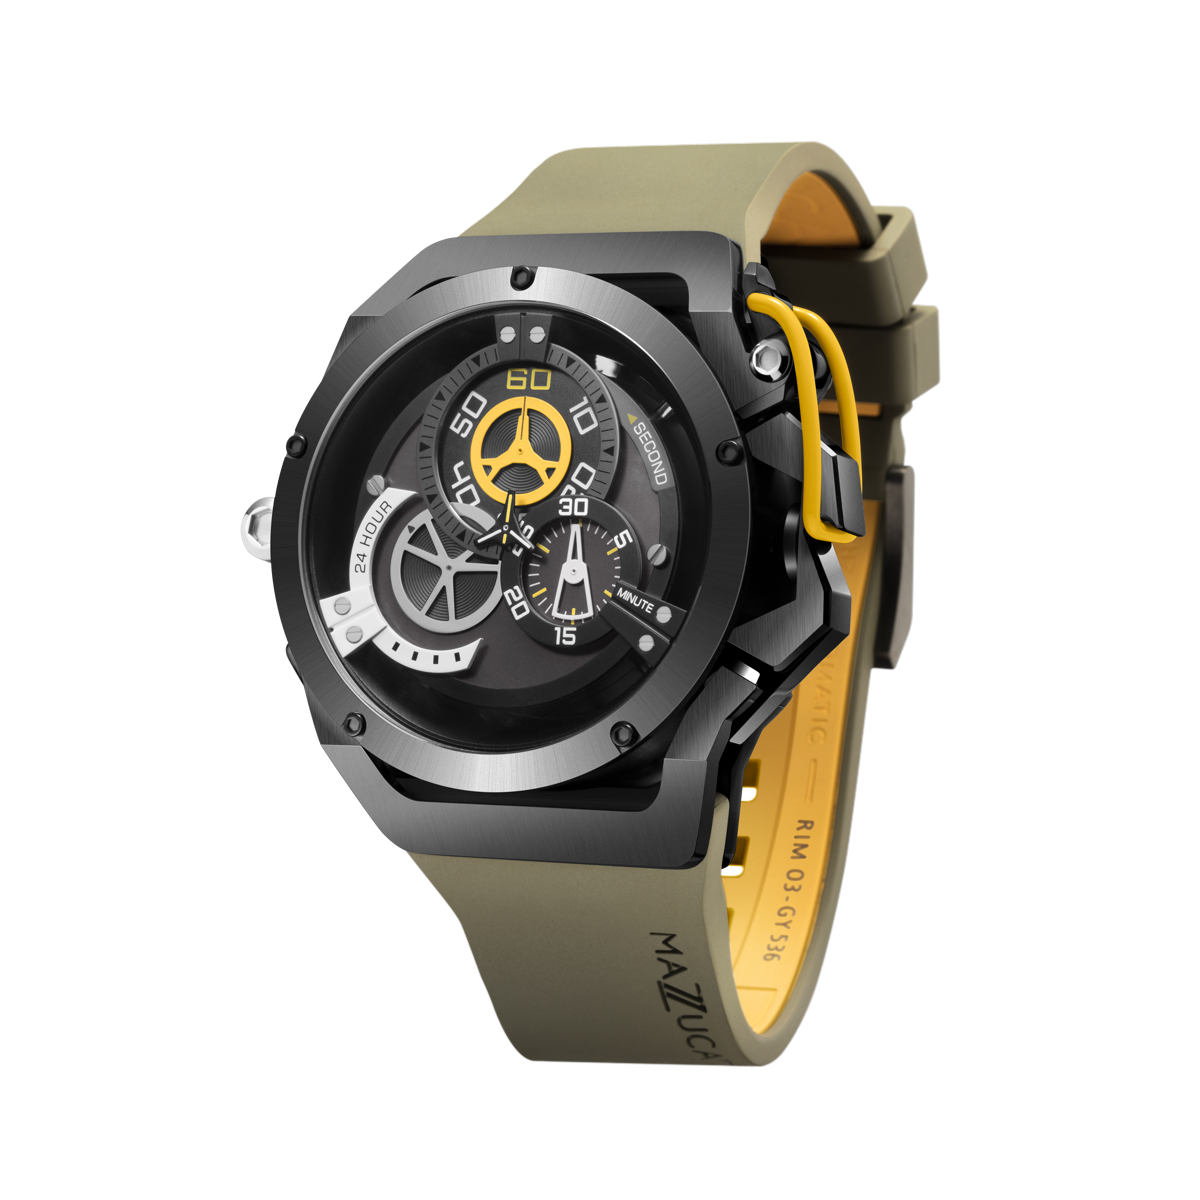 RIM Sport Chronograph Watch Ø48mm | Italian Watches | Luxury Sport Watches